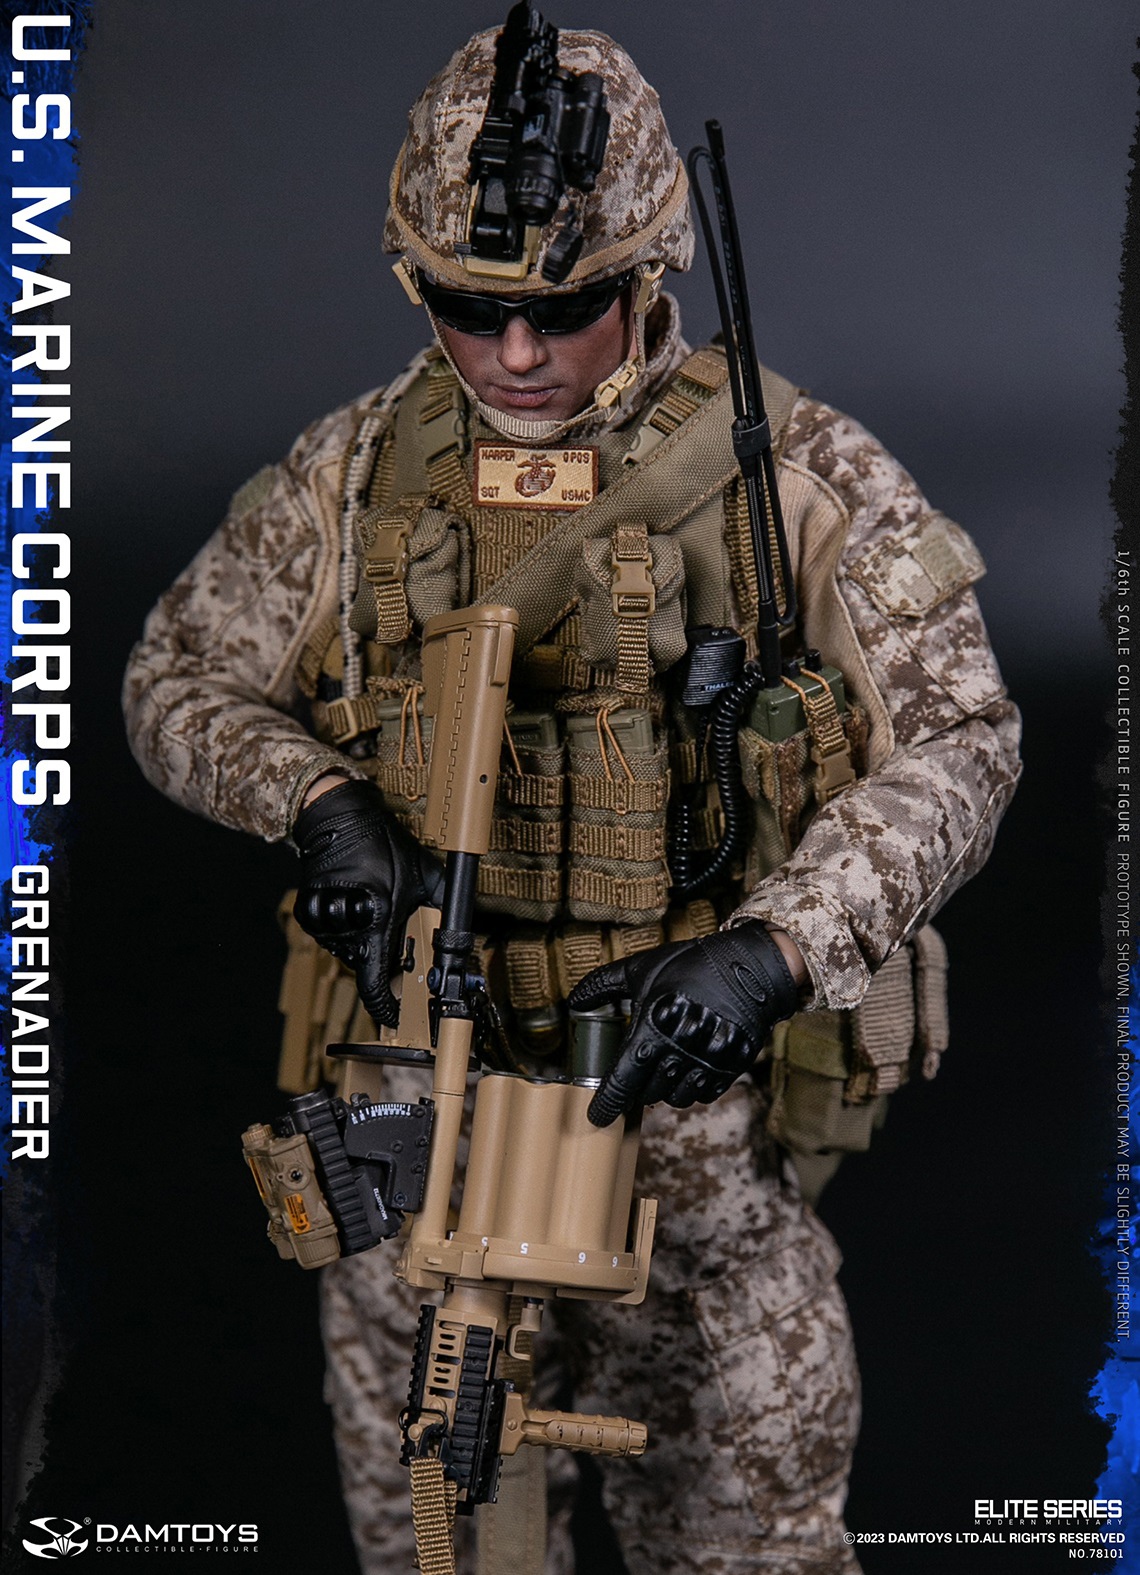 DamToys (78101) 1/6 Scale U.S. Marine Corps Grenadier Figure